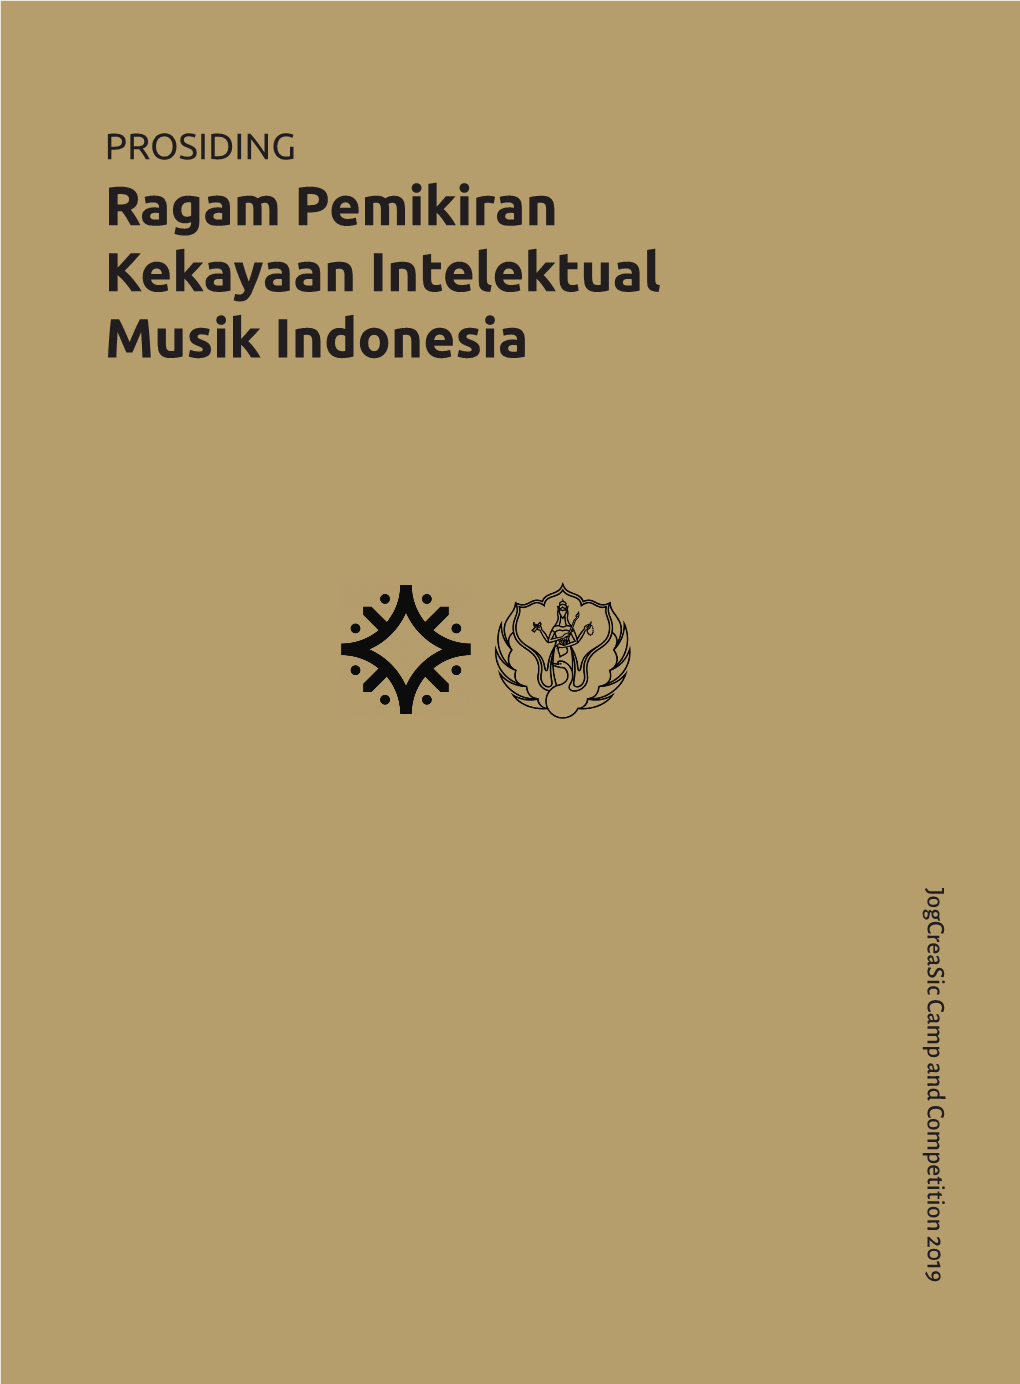 Ragam Pemikiran Kekayaan Intelektual Musik Indonesia